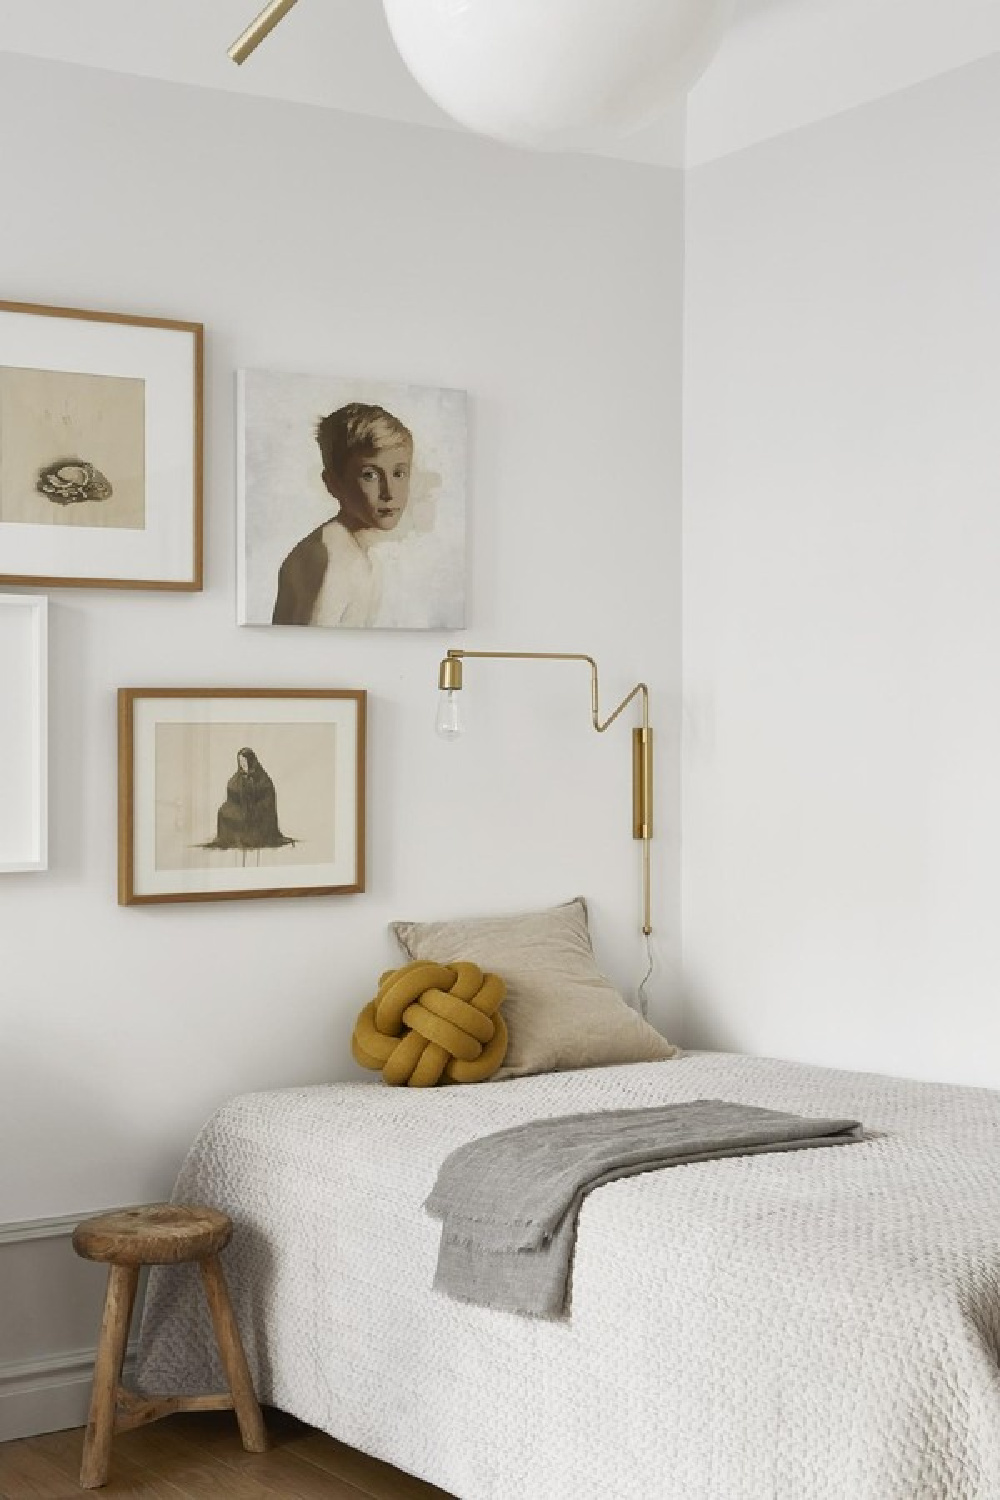 Gallery wall in a serene white Stockholm bedroom - Fantastic Frank. #serenebedroom #gallerywall #swedishdesign